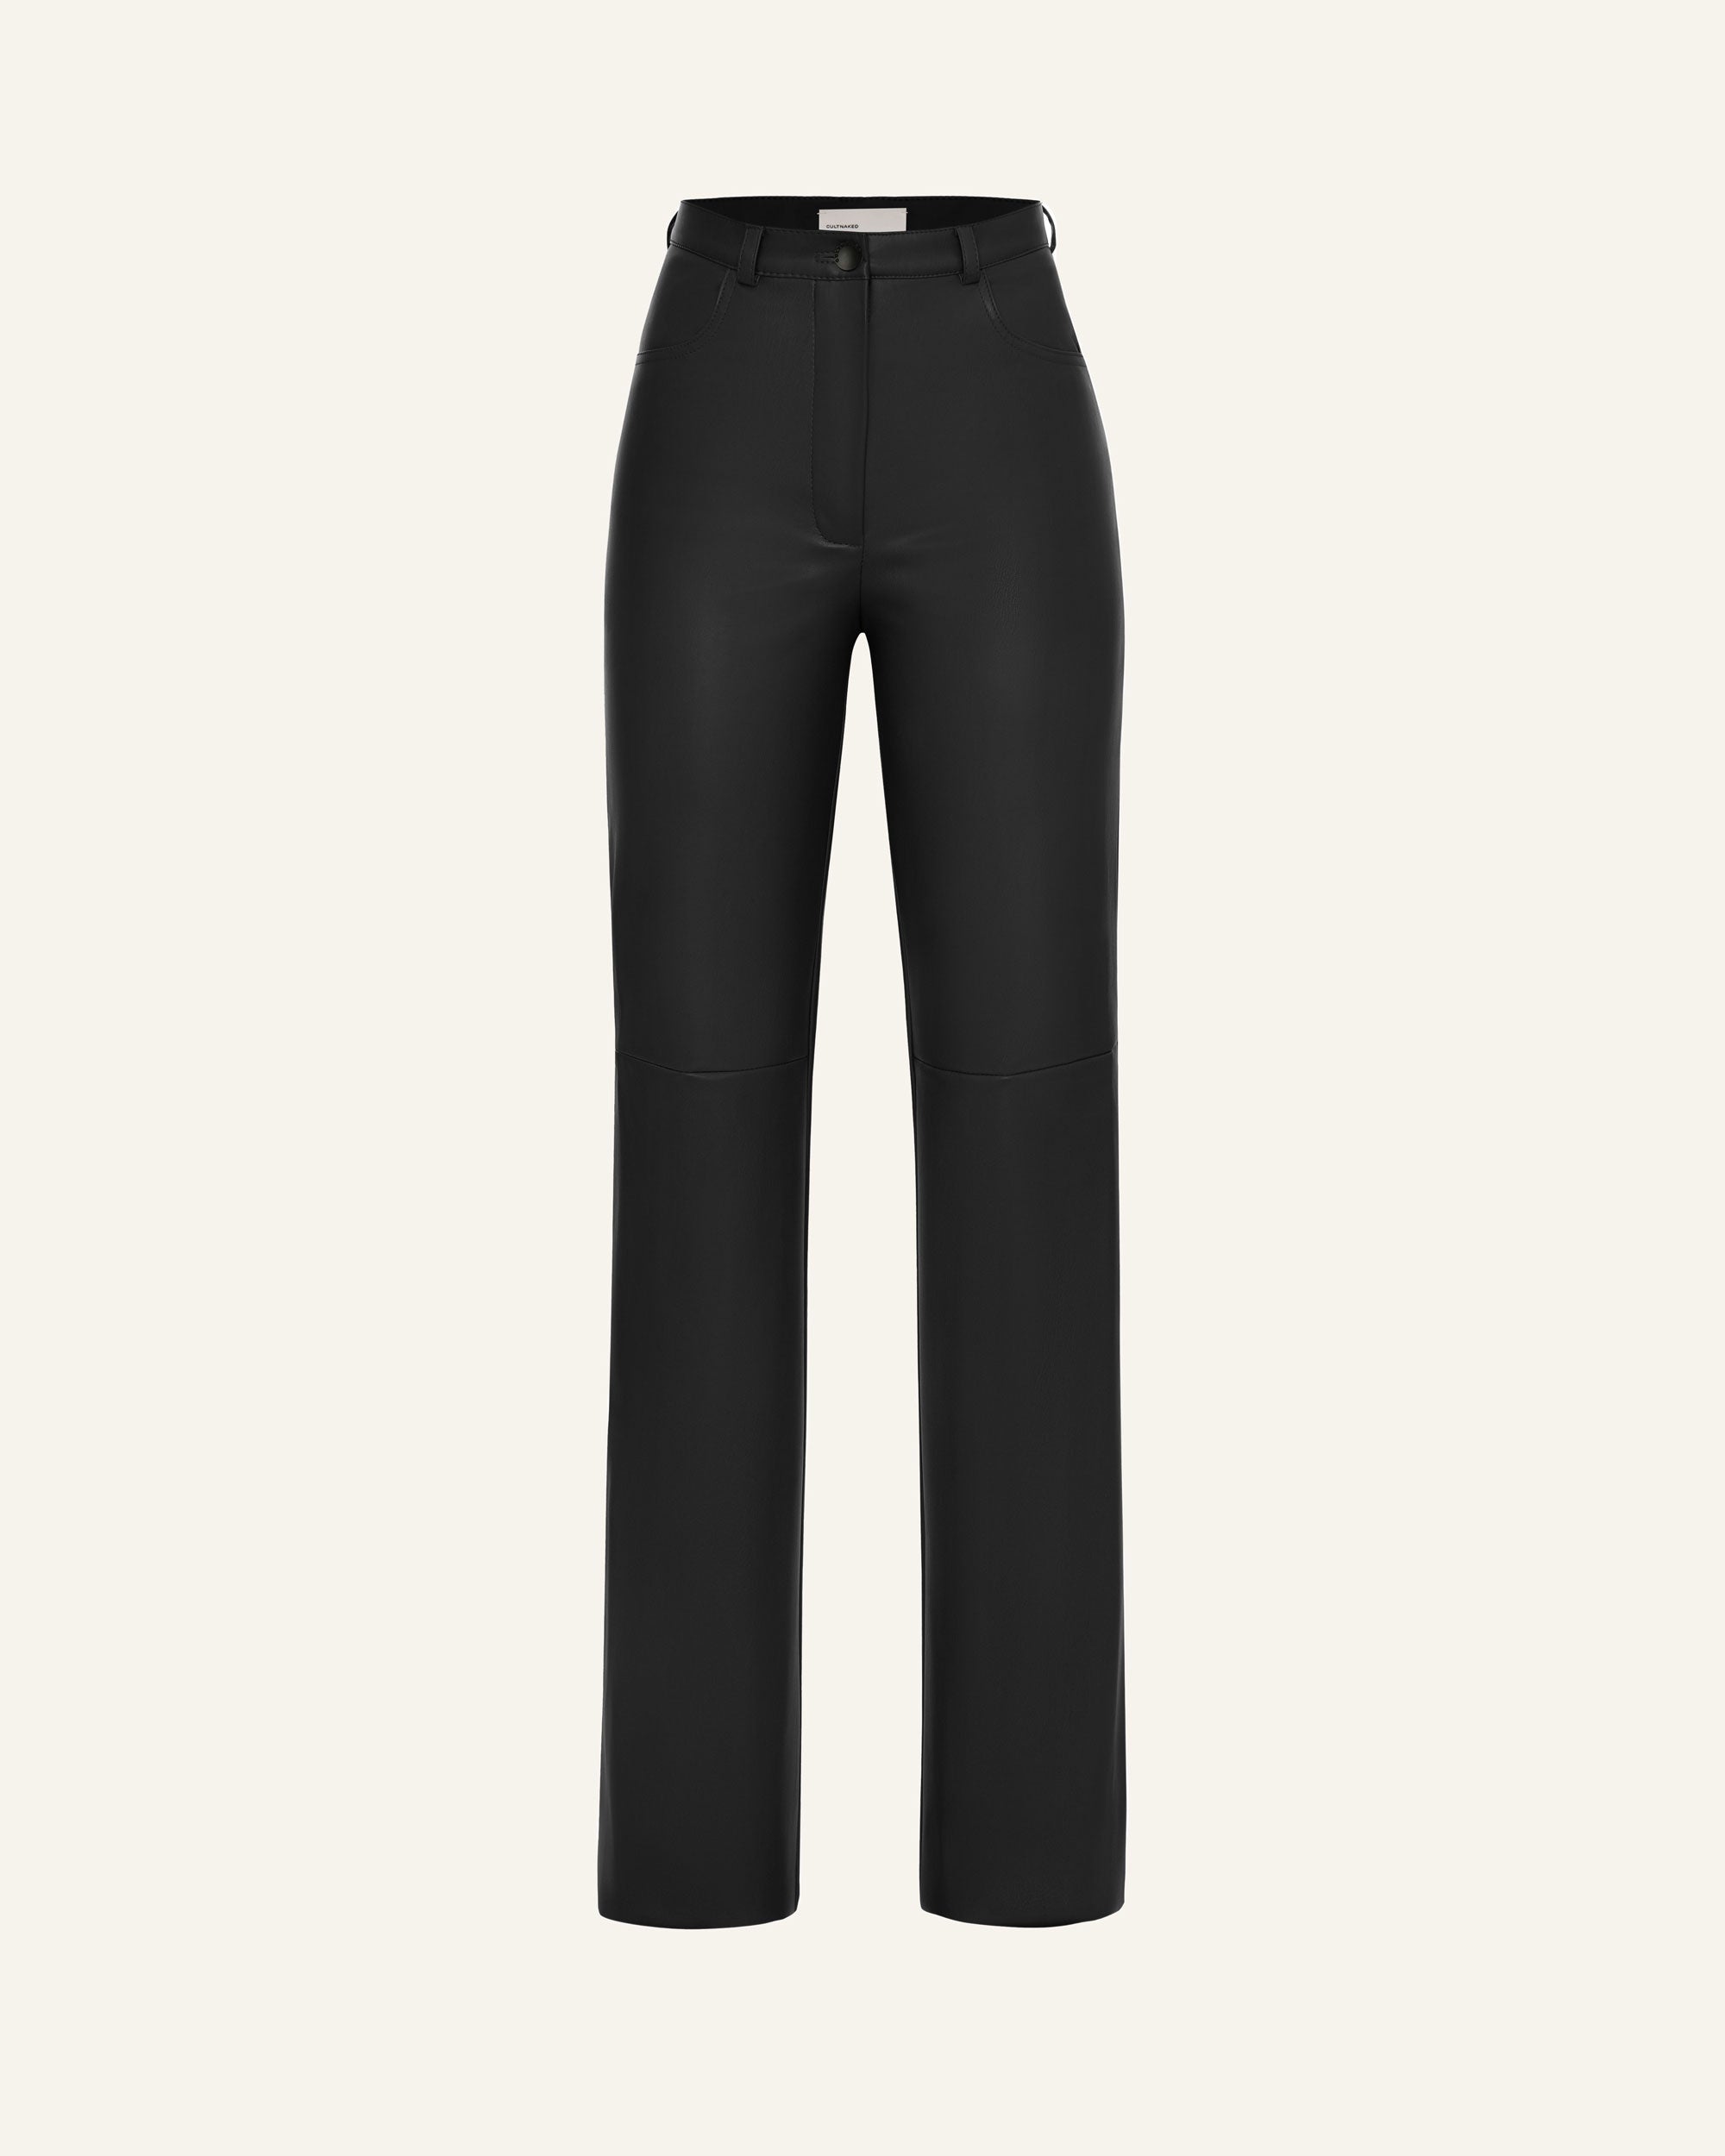 Product photo of black vegan leather high rise straight leg pants